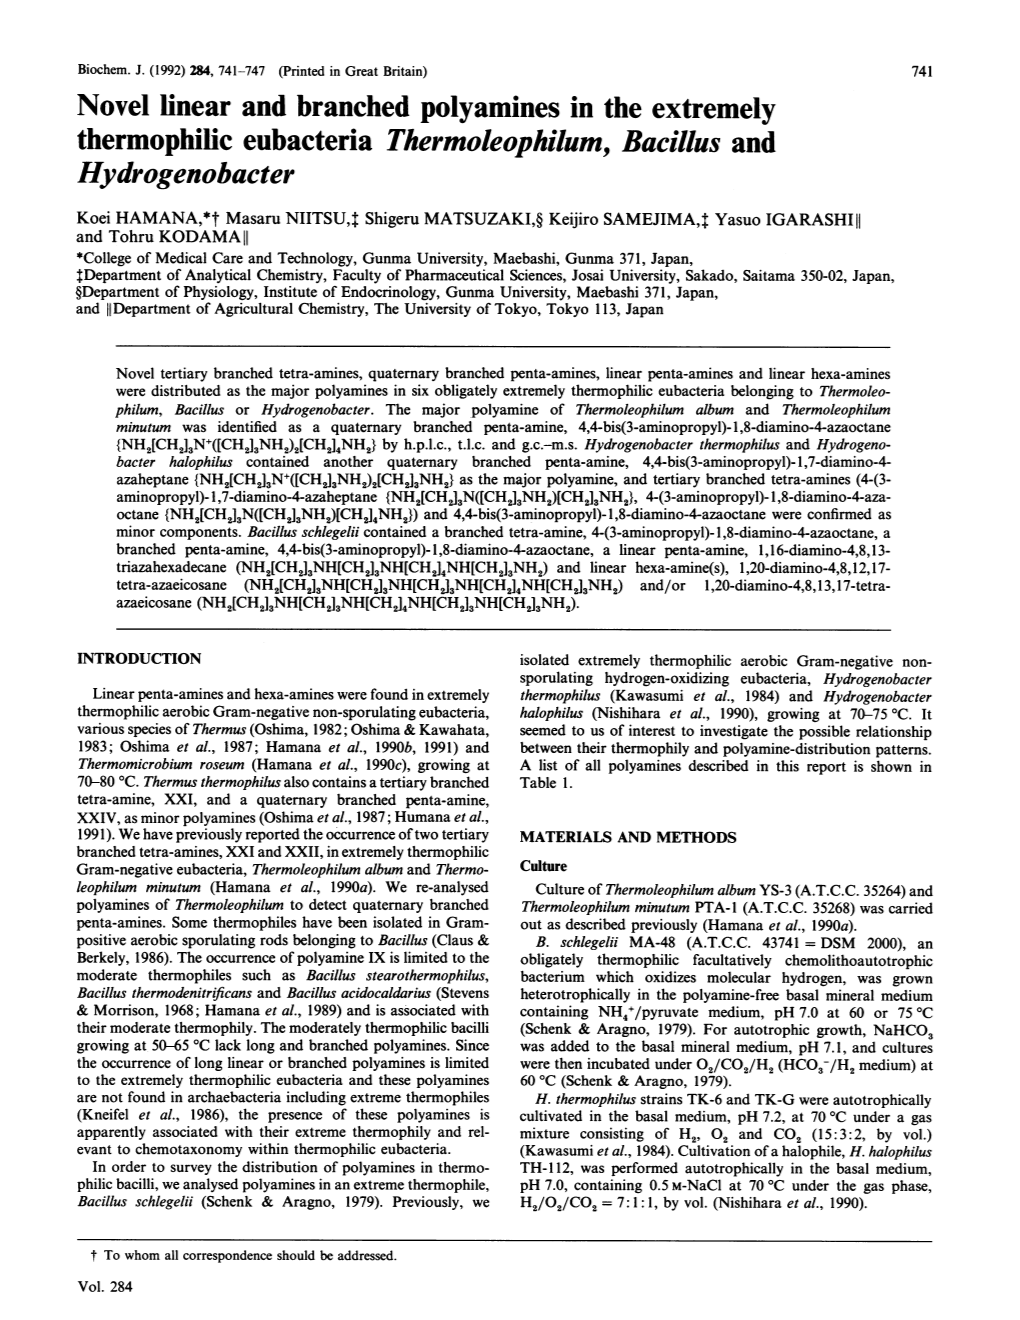 Thermophilic Eubacteria Thermoleophilum, Bacillus